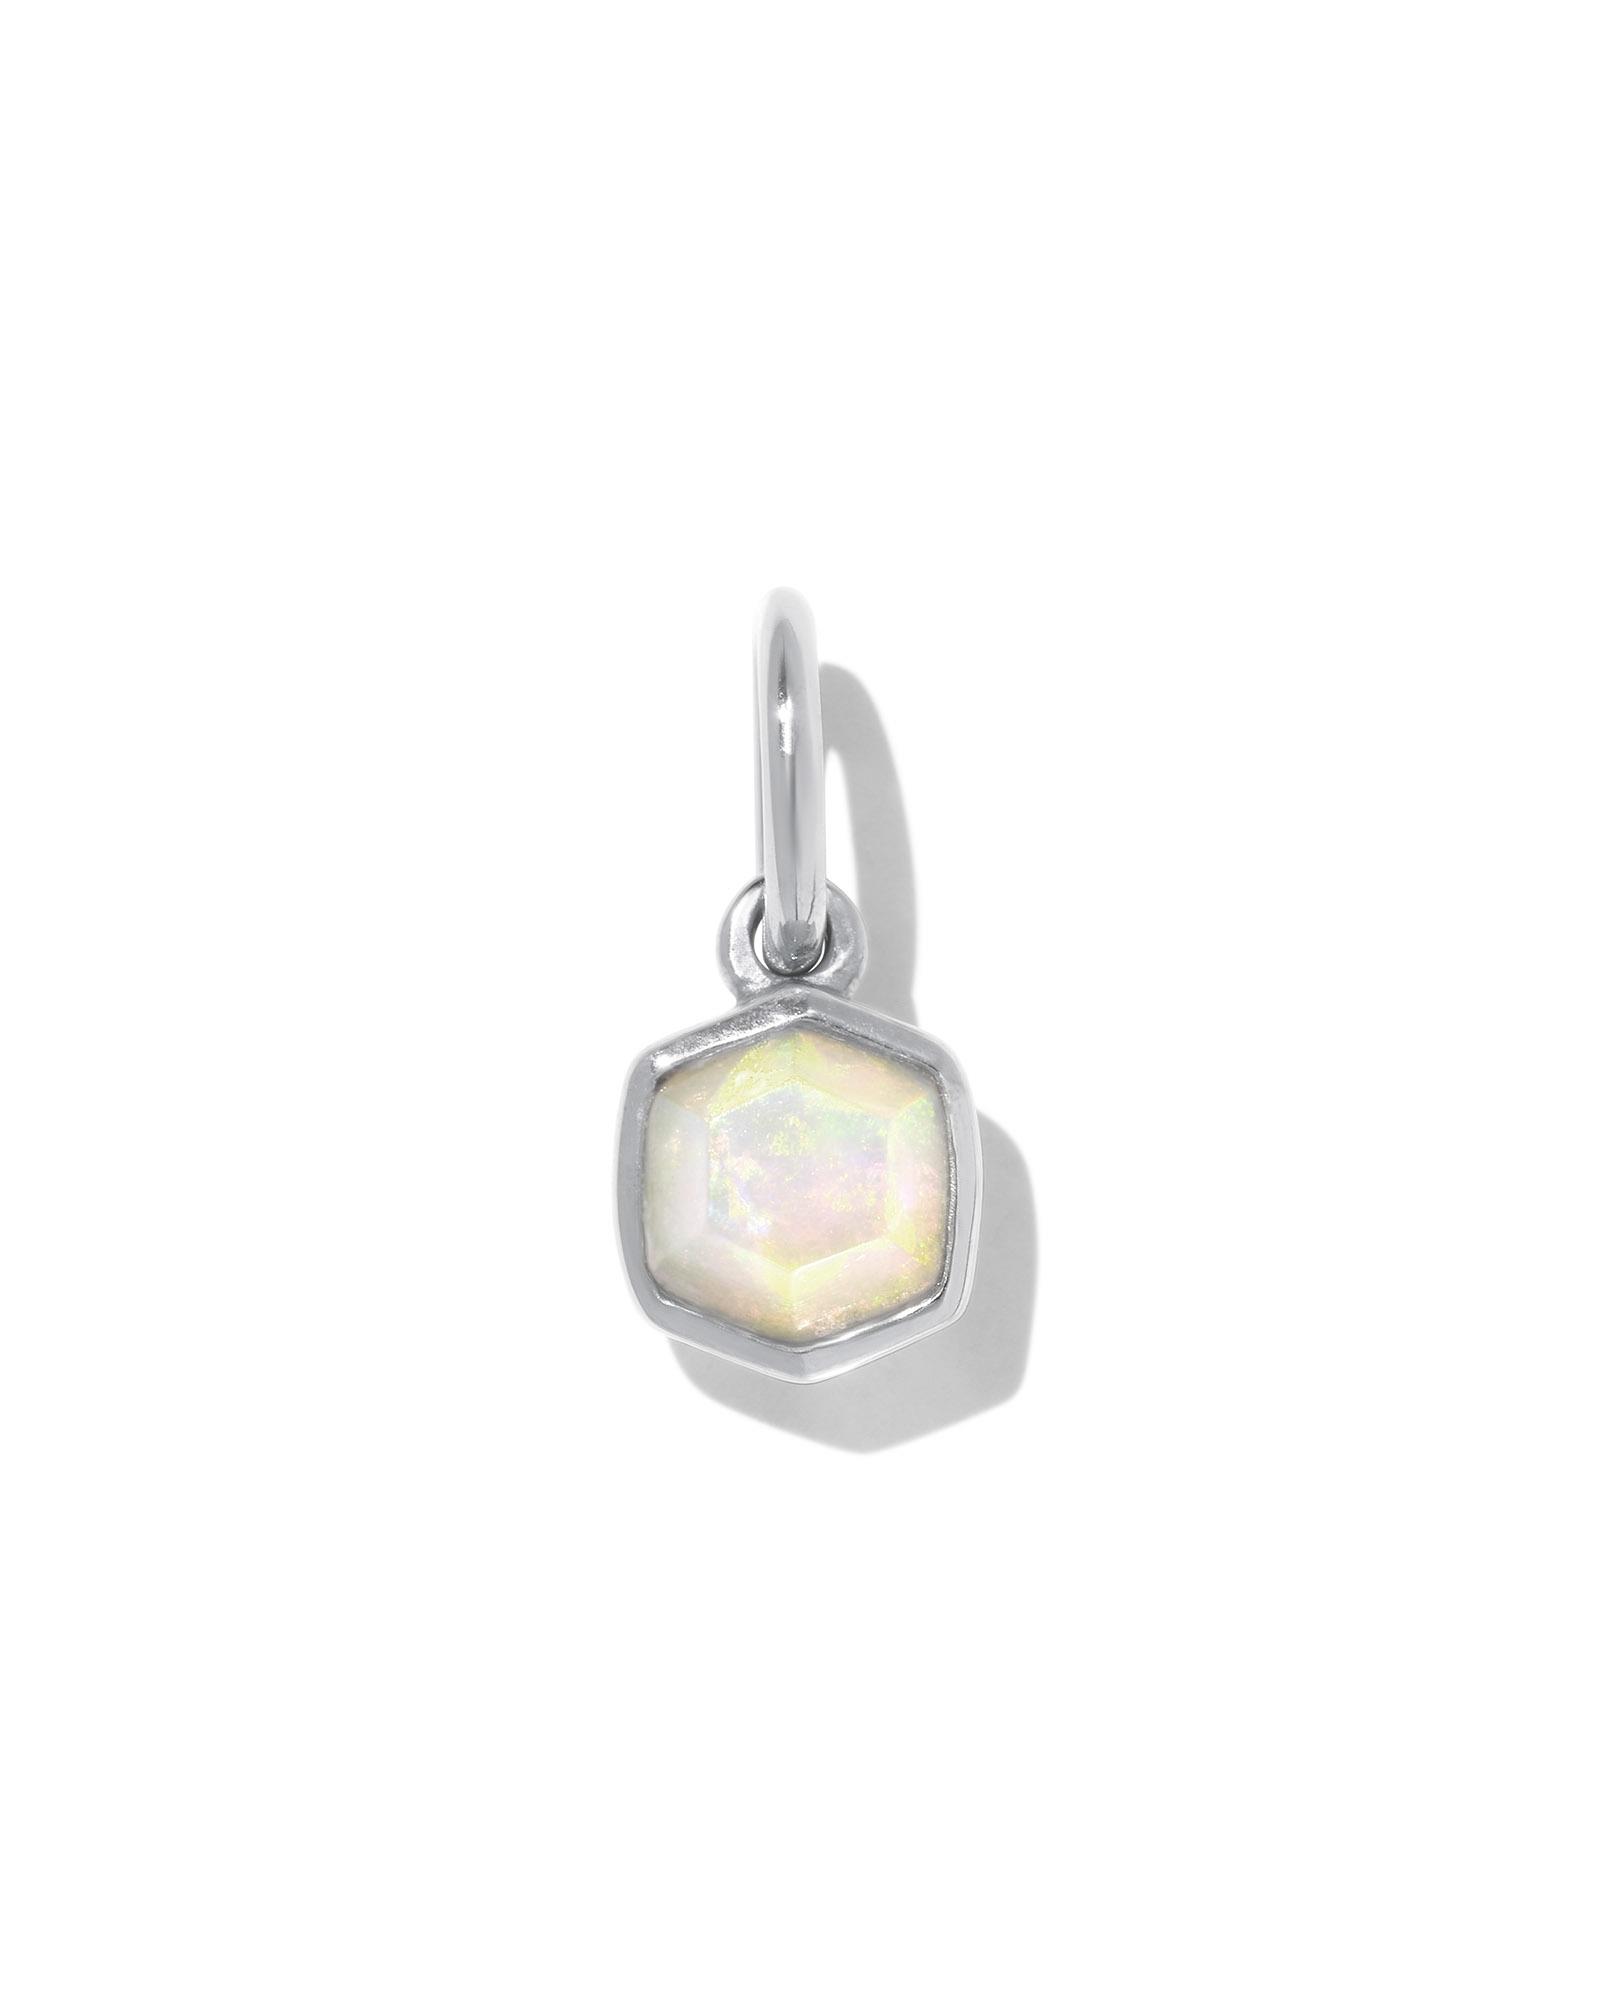 Davie Sterling Silver Charm in White Kyocera Opal